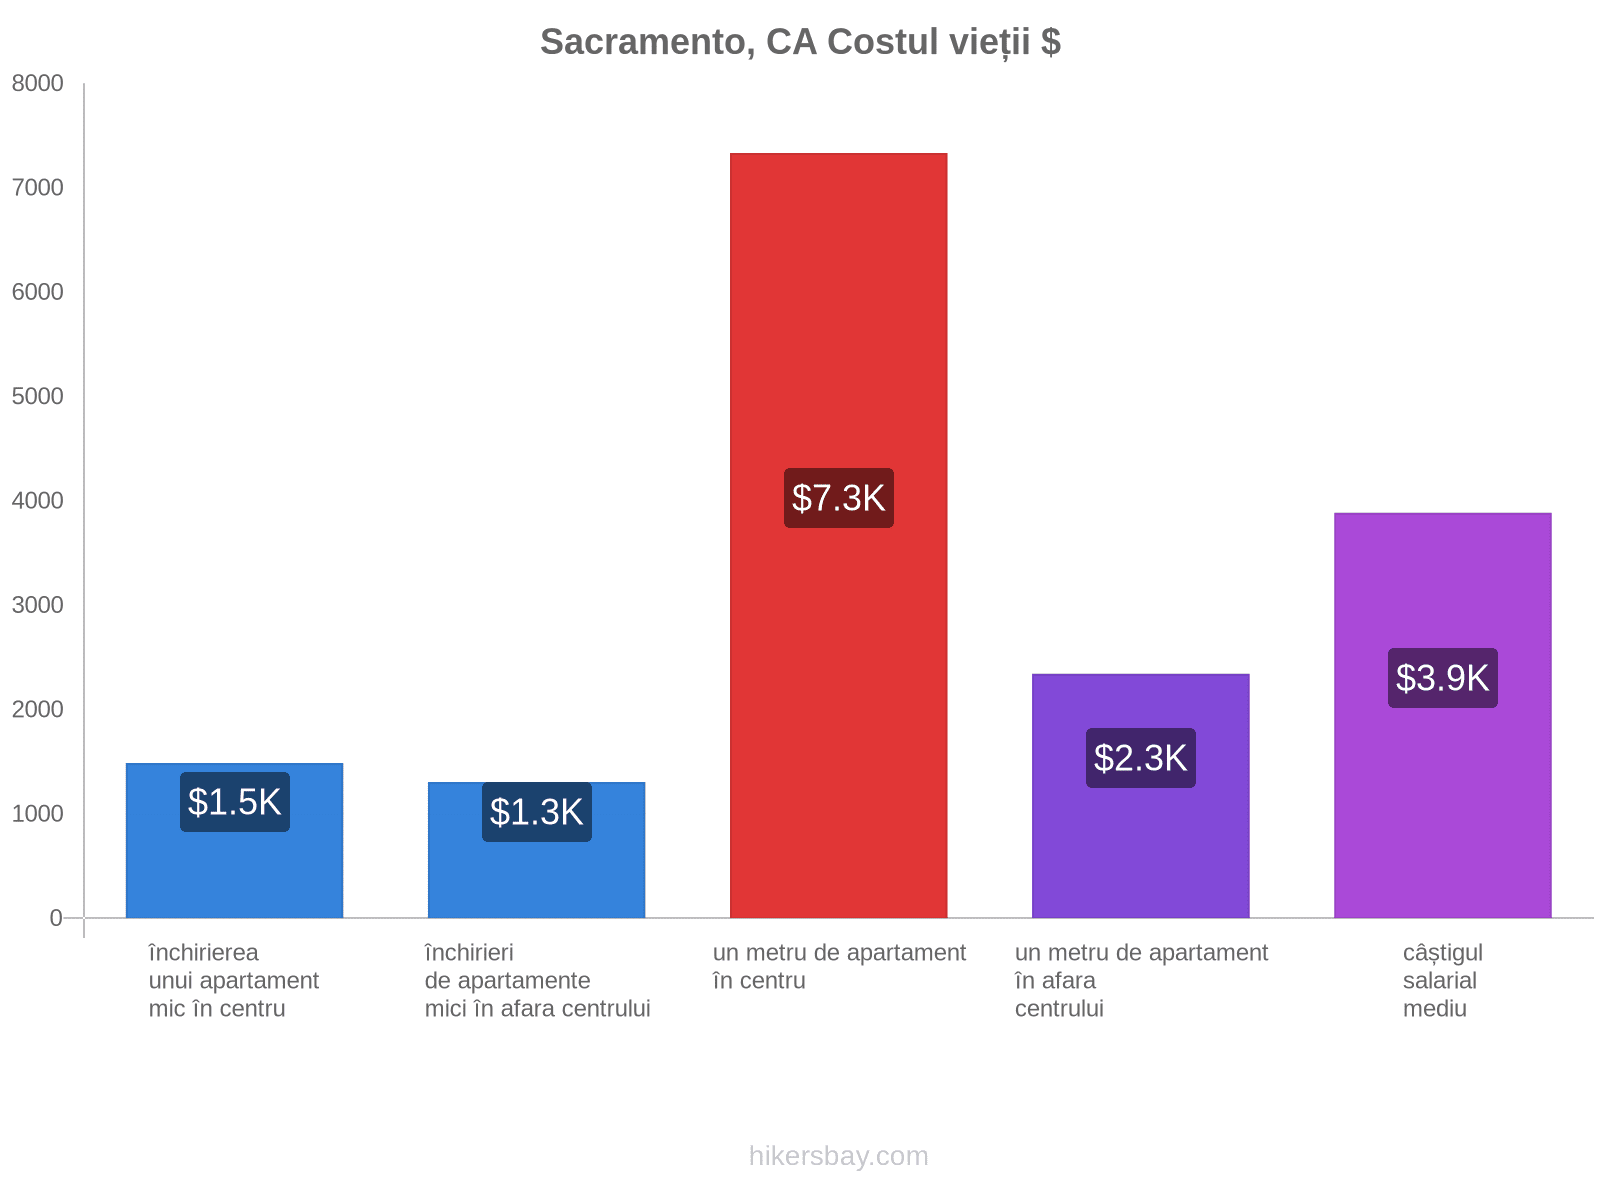 Sacramento, CA costul vieții hikersbay.com